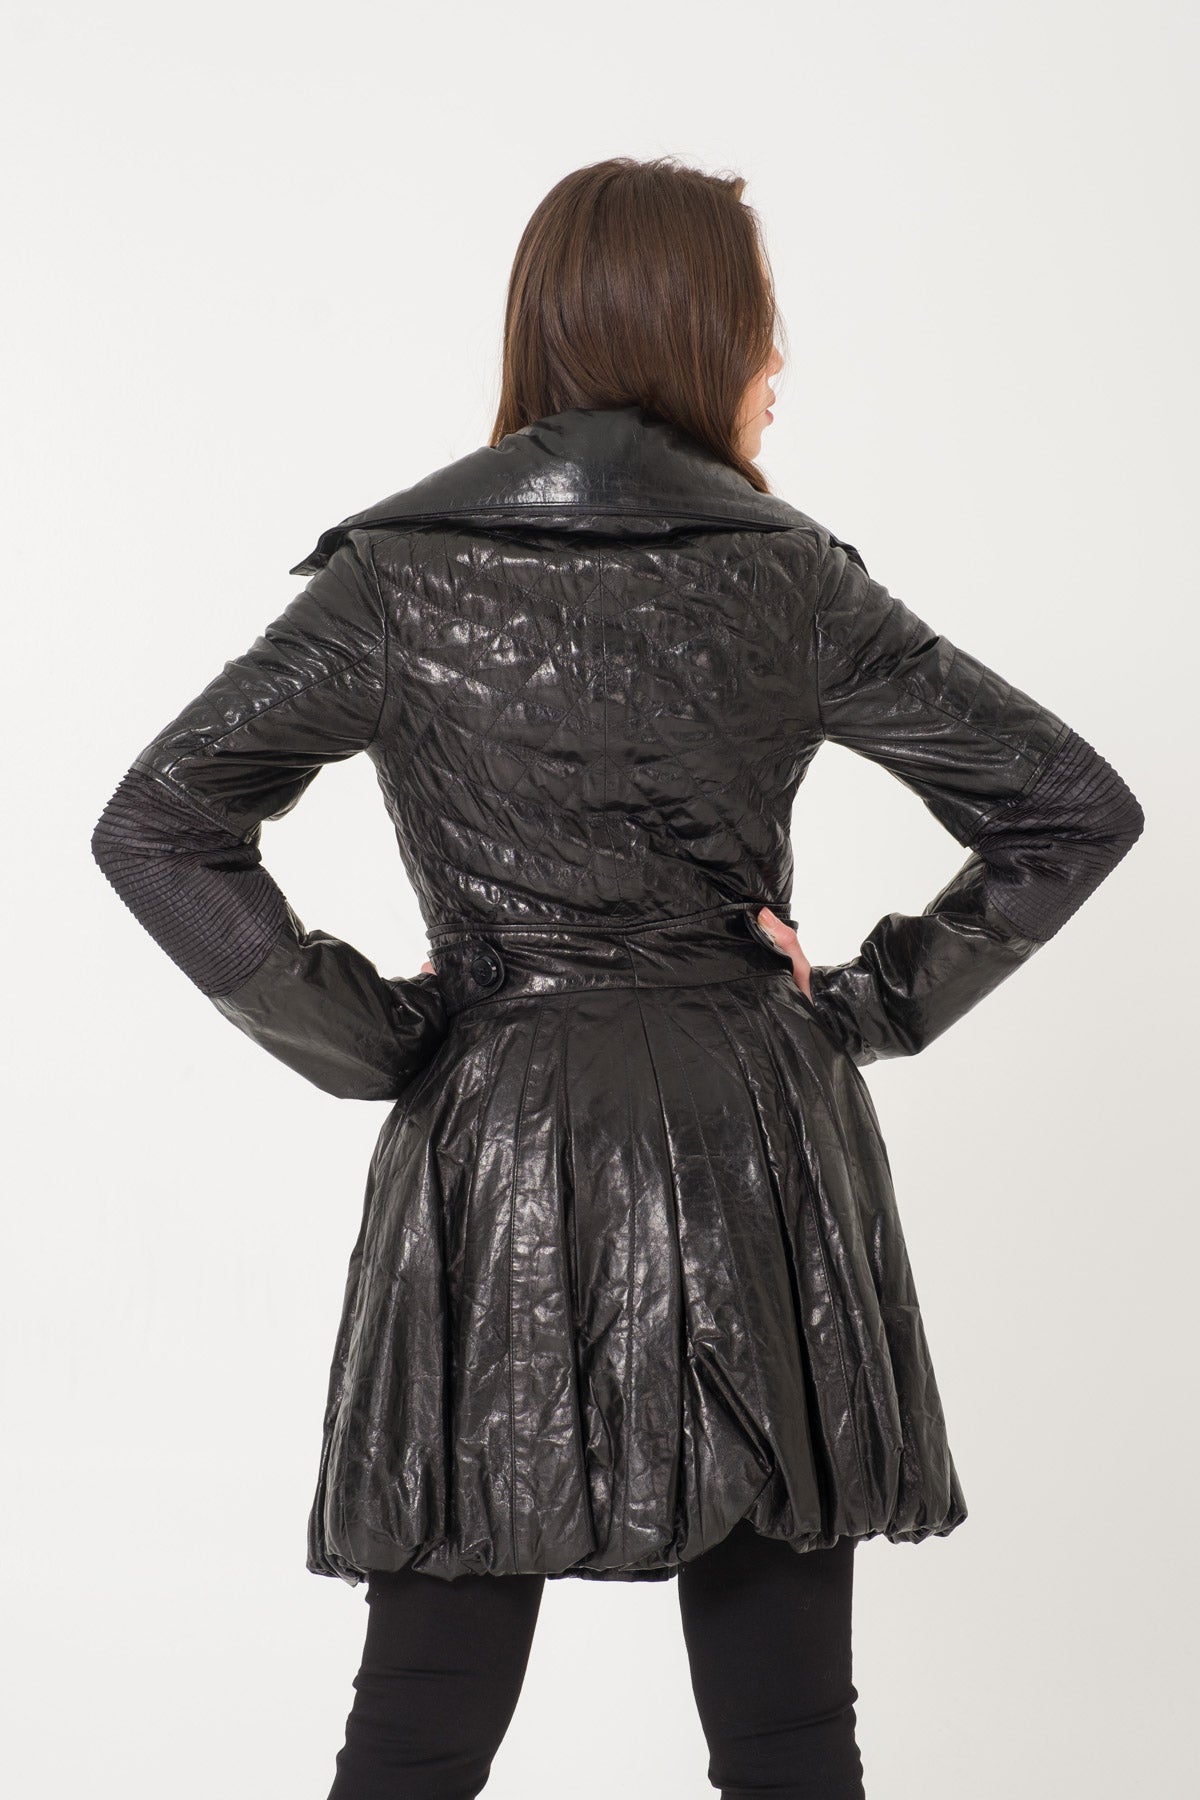 Black Leather Coat